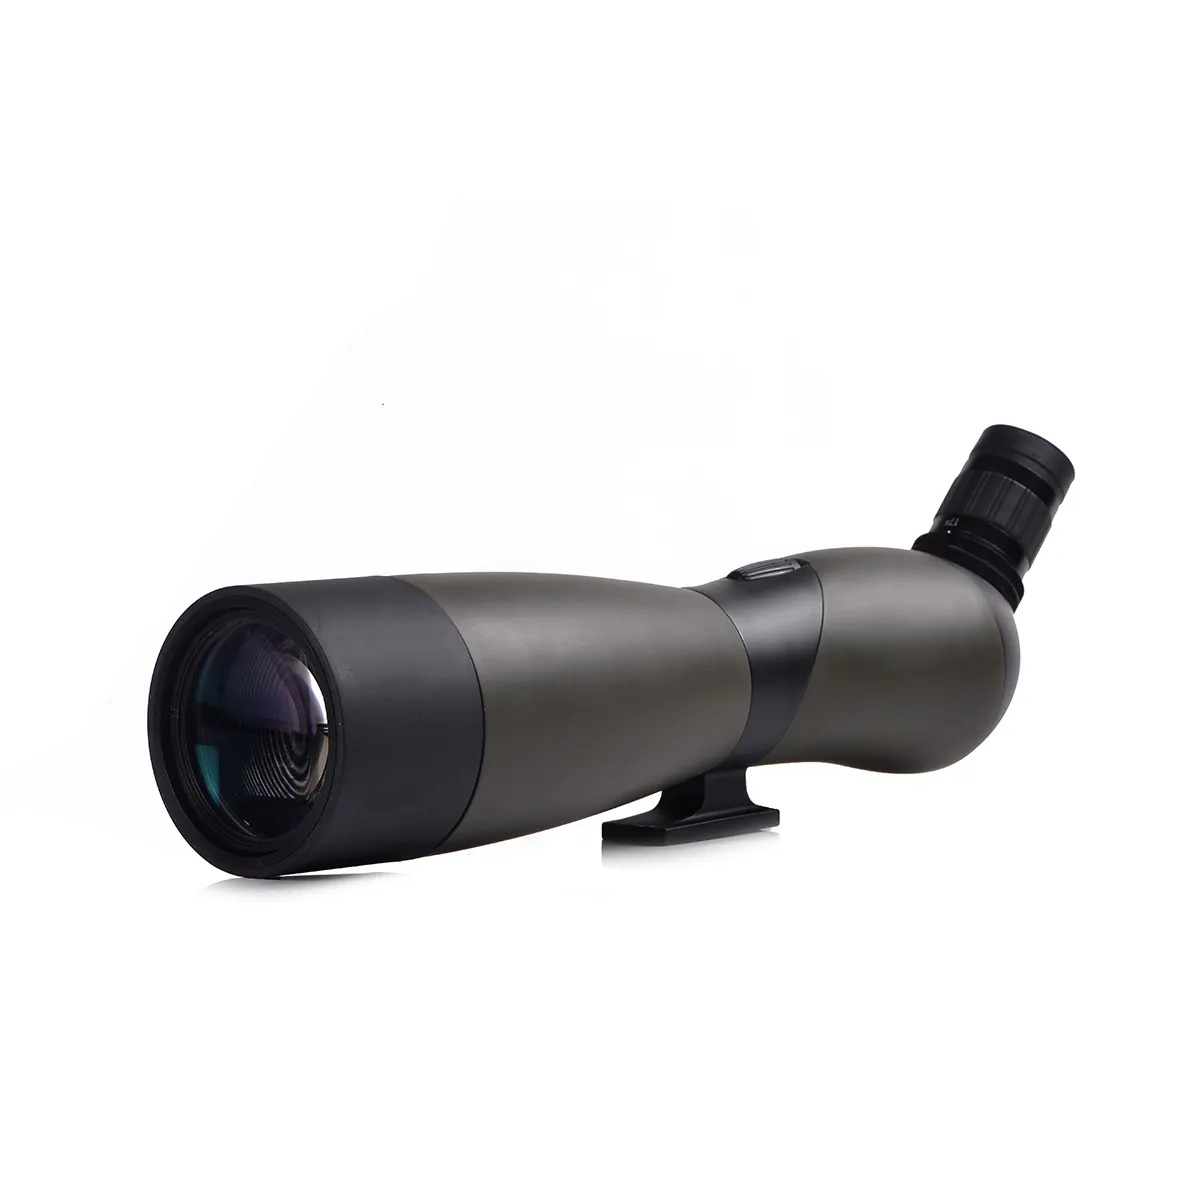 Waterproof 25-75x70 Optical Astronomical Zoom Monocular Telescope Spotting Scope for Bird Watching Archery